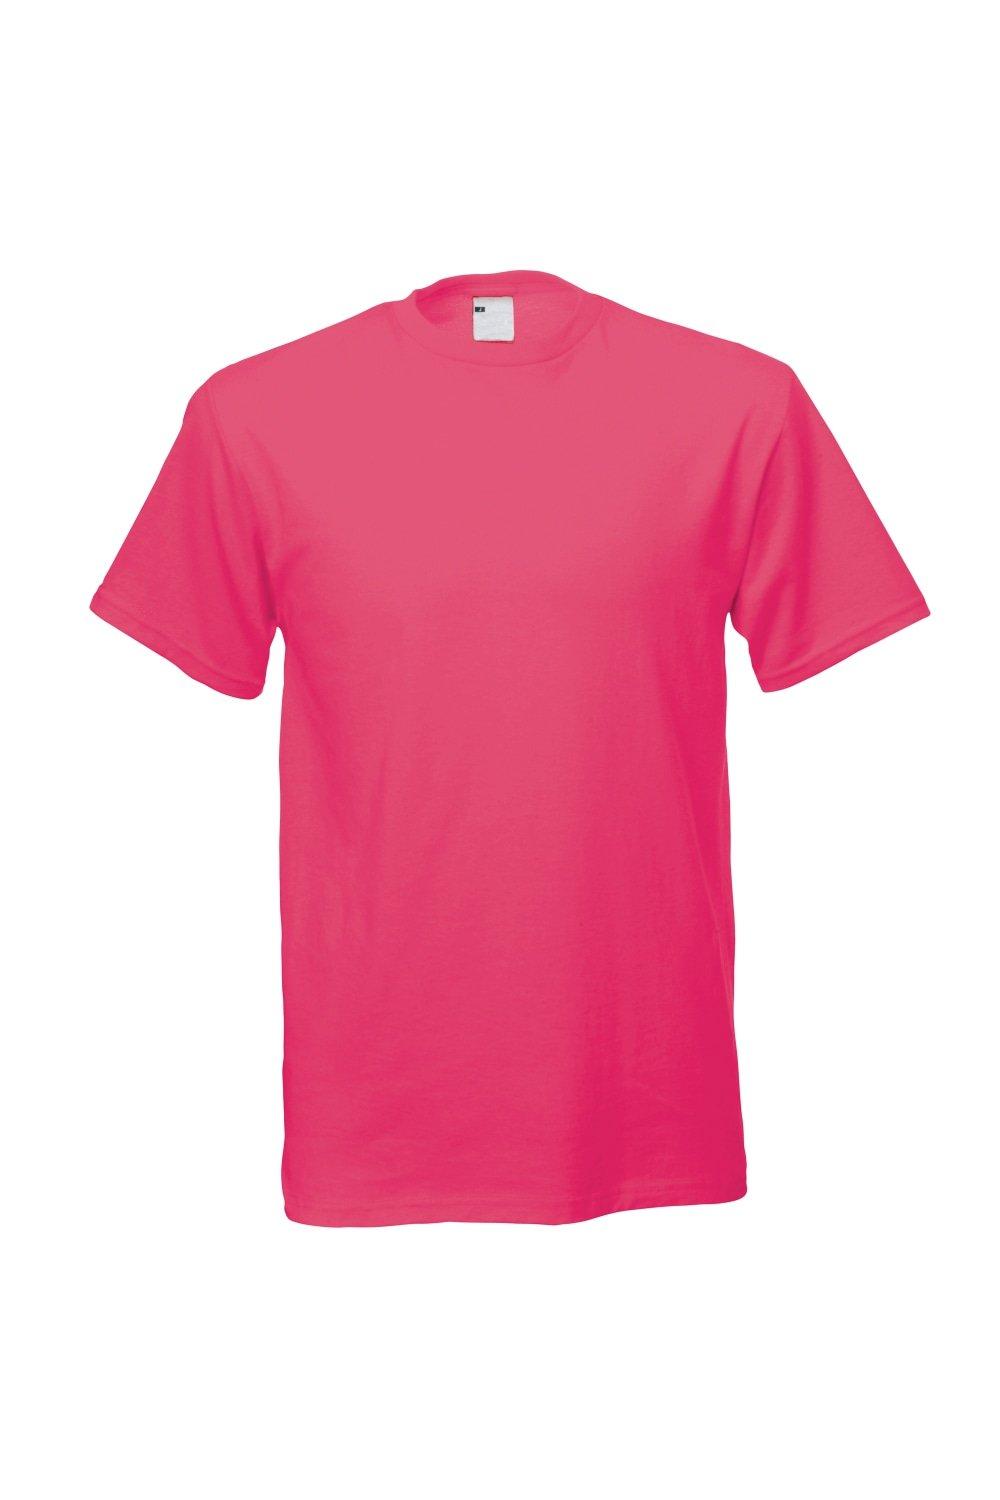 Повседневная футболка с коротким рукавом Universal Textiles, розовый мужская футболка мороженое арбуз киви 2xl серый меланж